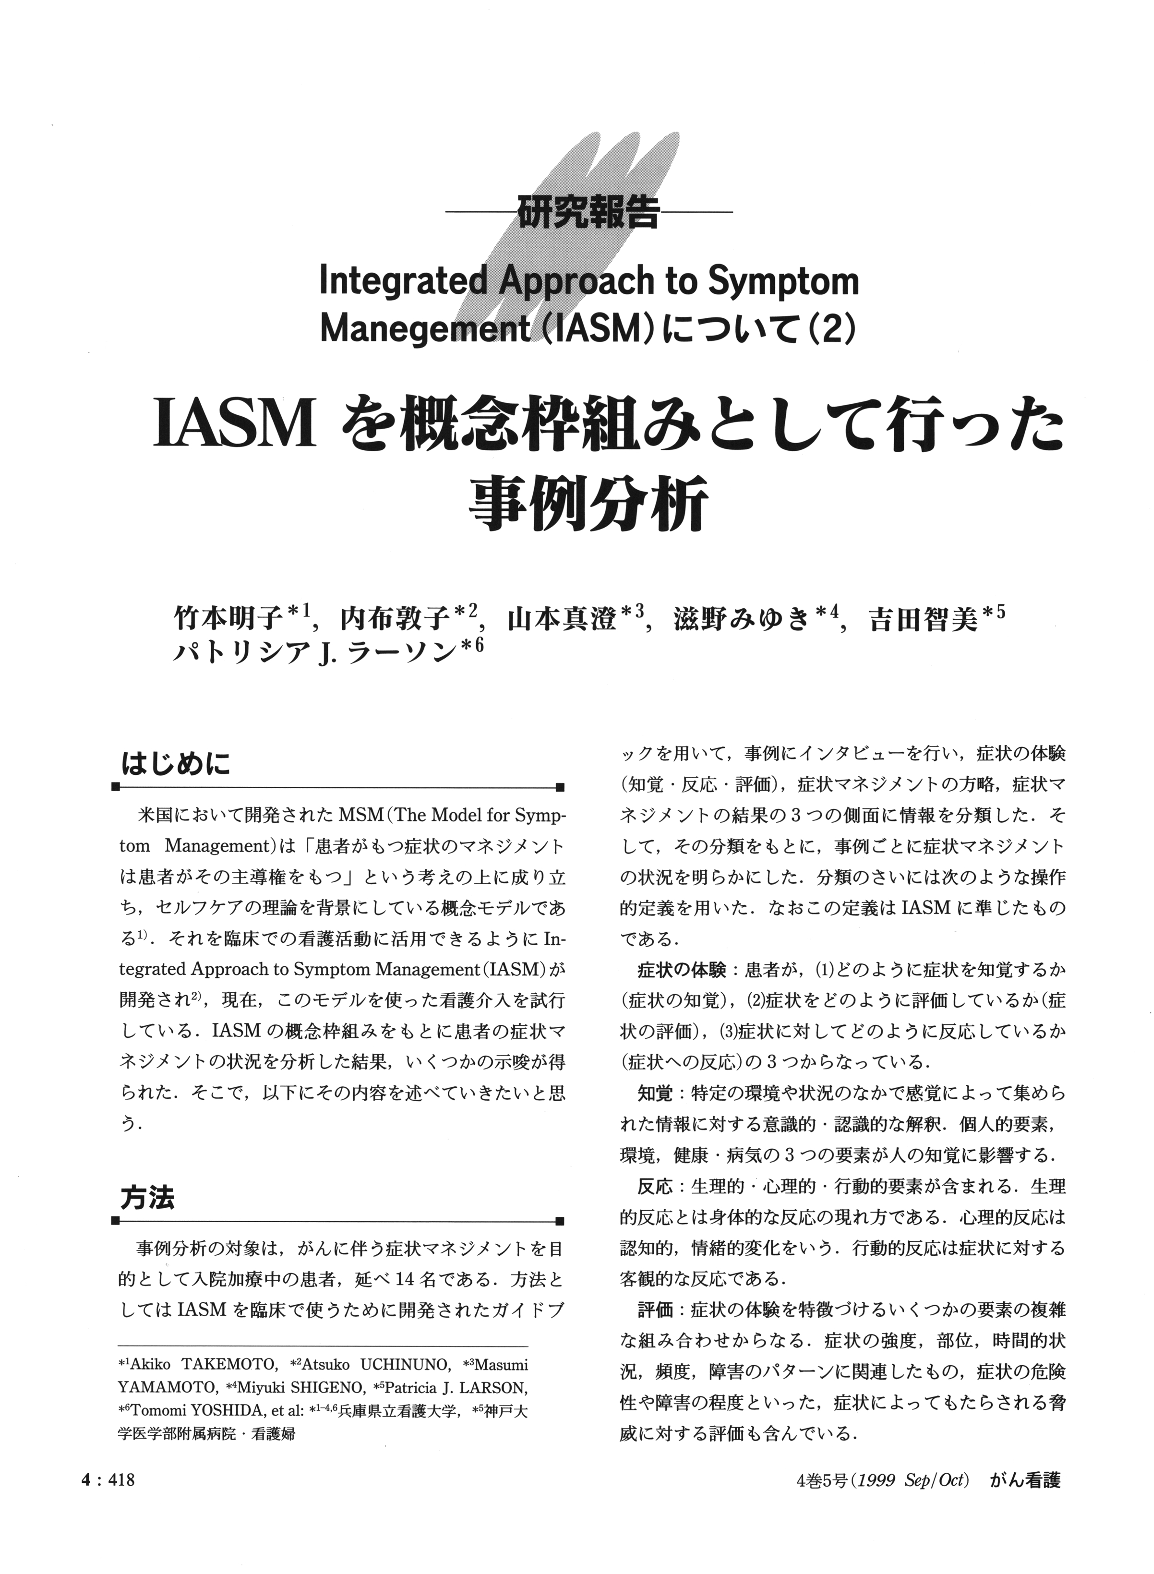 Integrated Approach to Symptom Management(IASM)について IASMを概念